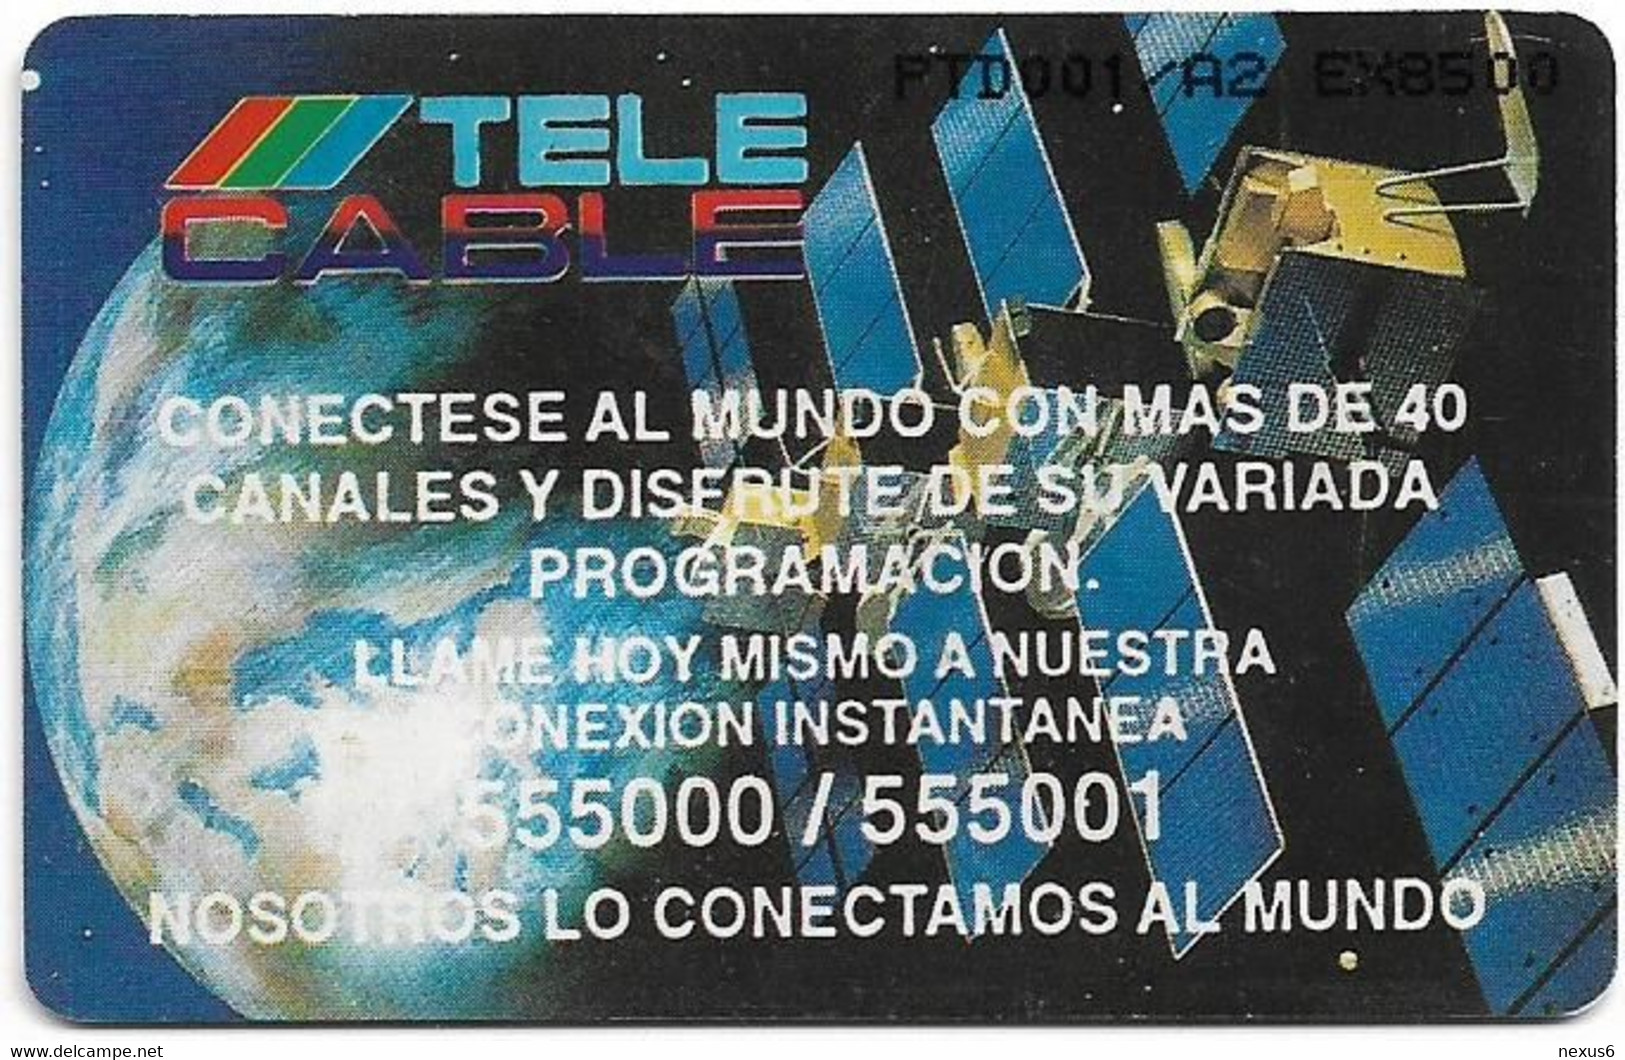 Peru - Telepoint - Machu Picchu Puzzle Piece 1/4 (Reverse 'Telecable'), 50Sol, 8.500ex, Used - Pérou